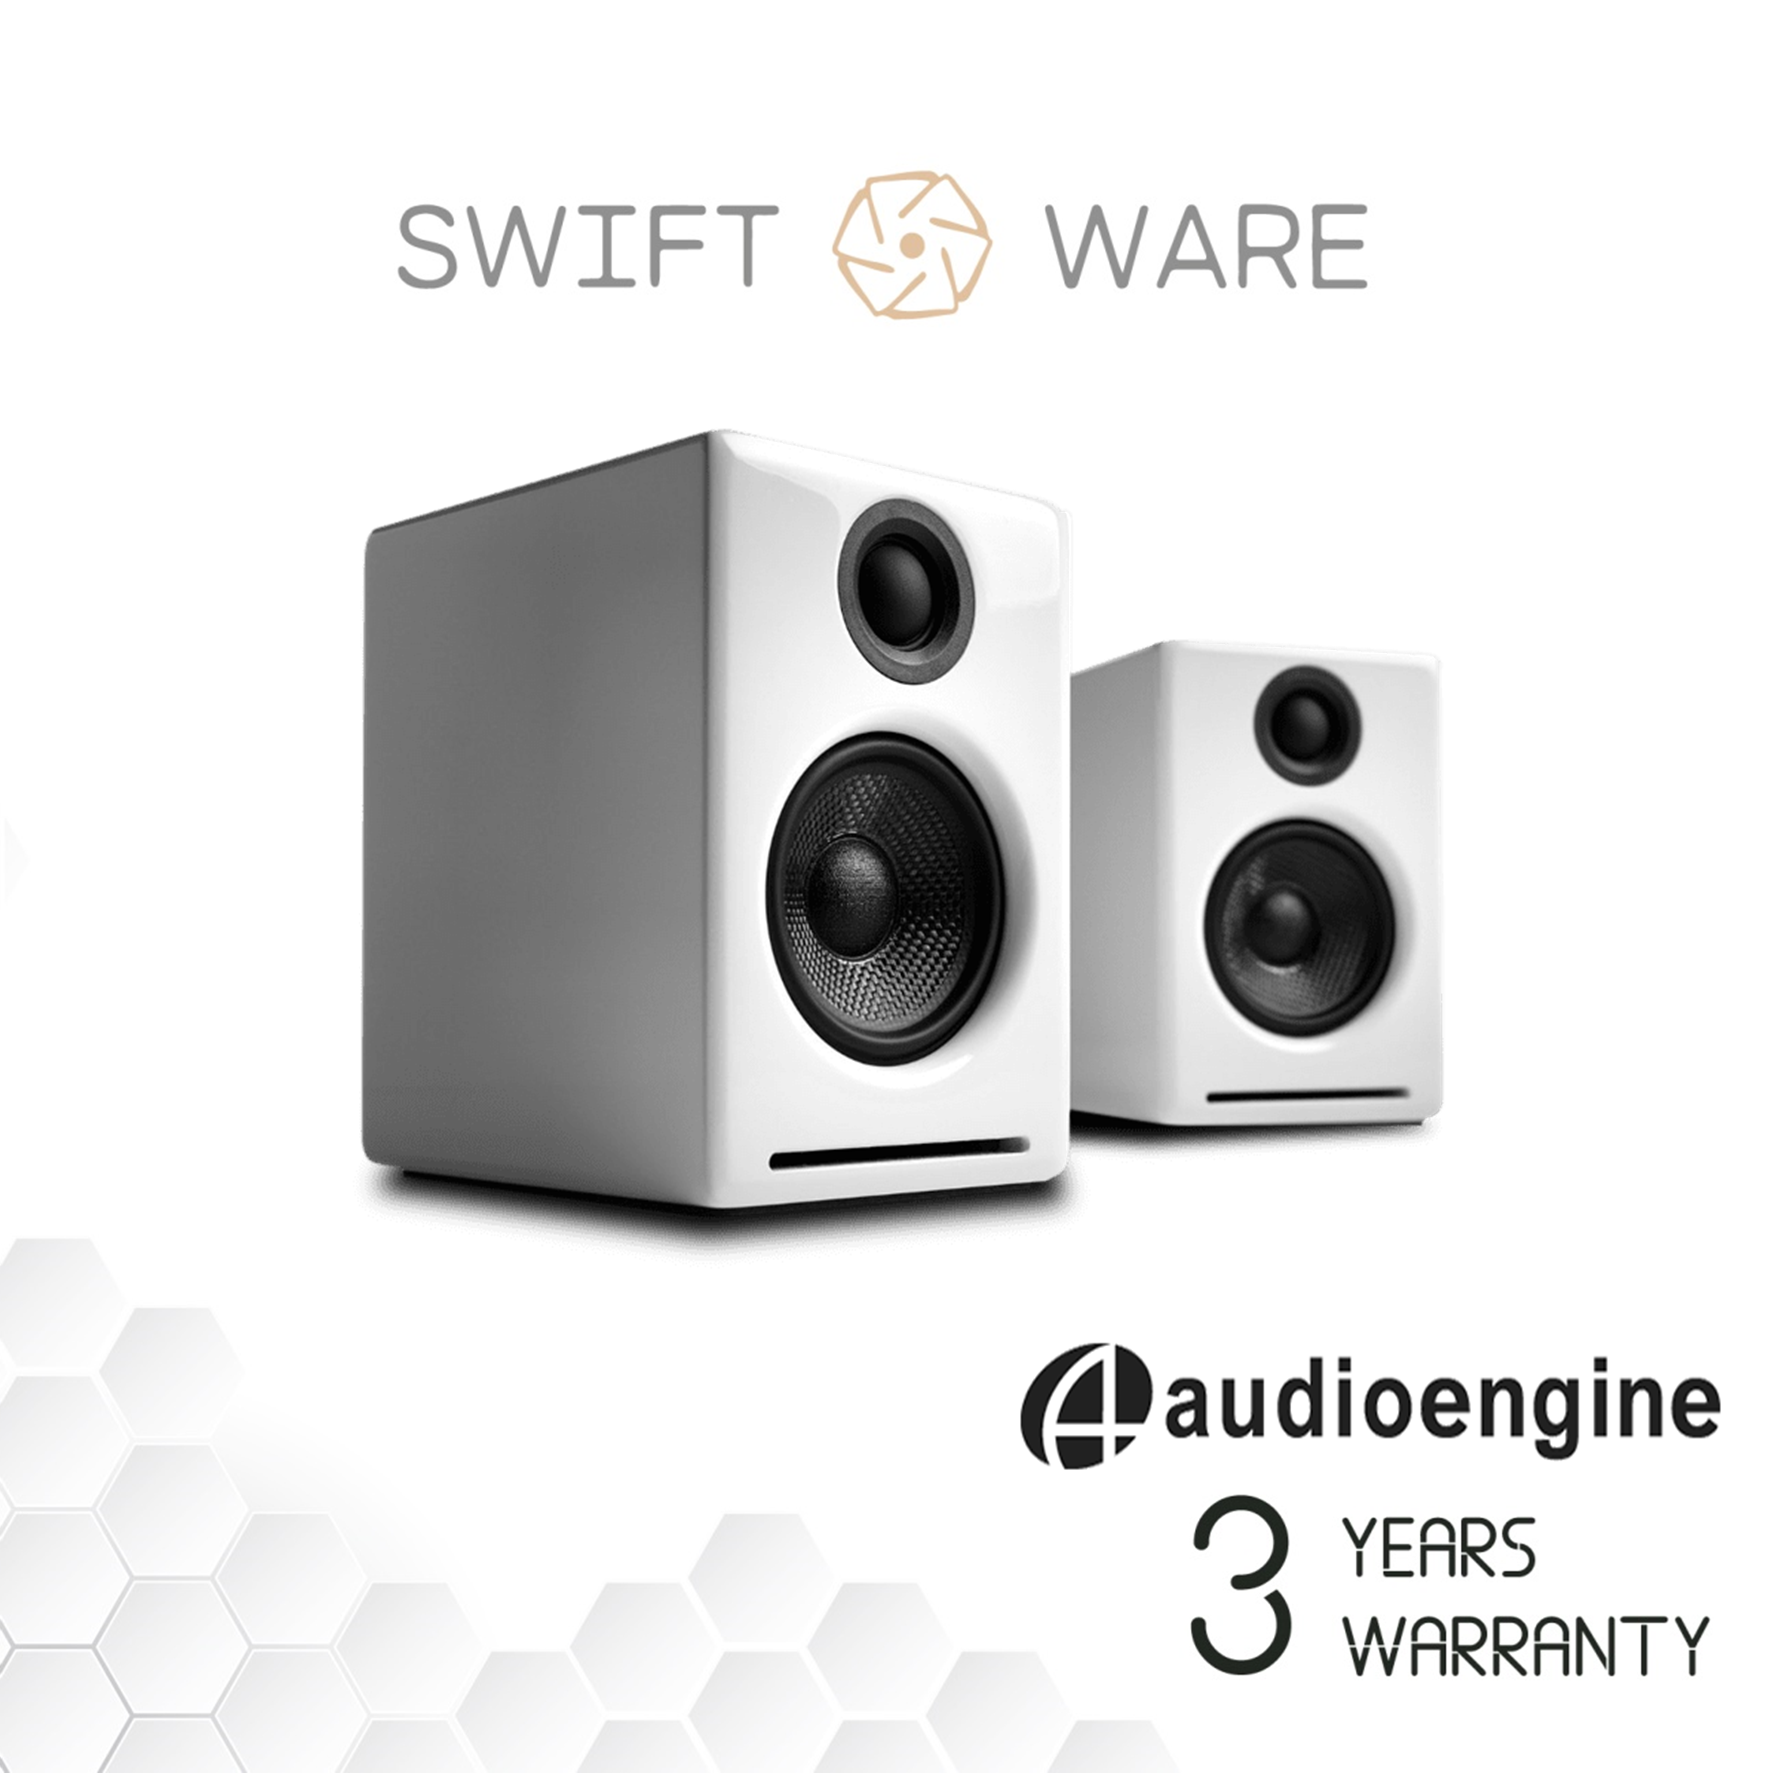 Audioengine A2+ Home Music System w/ Bluetooth aptX Wireless